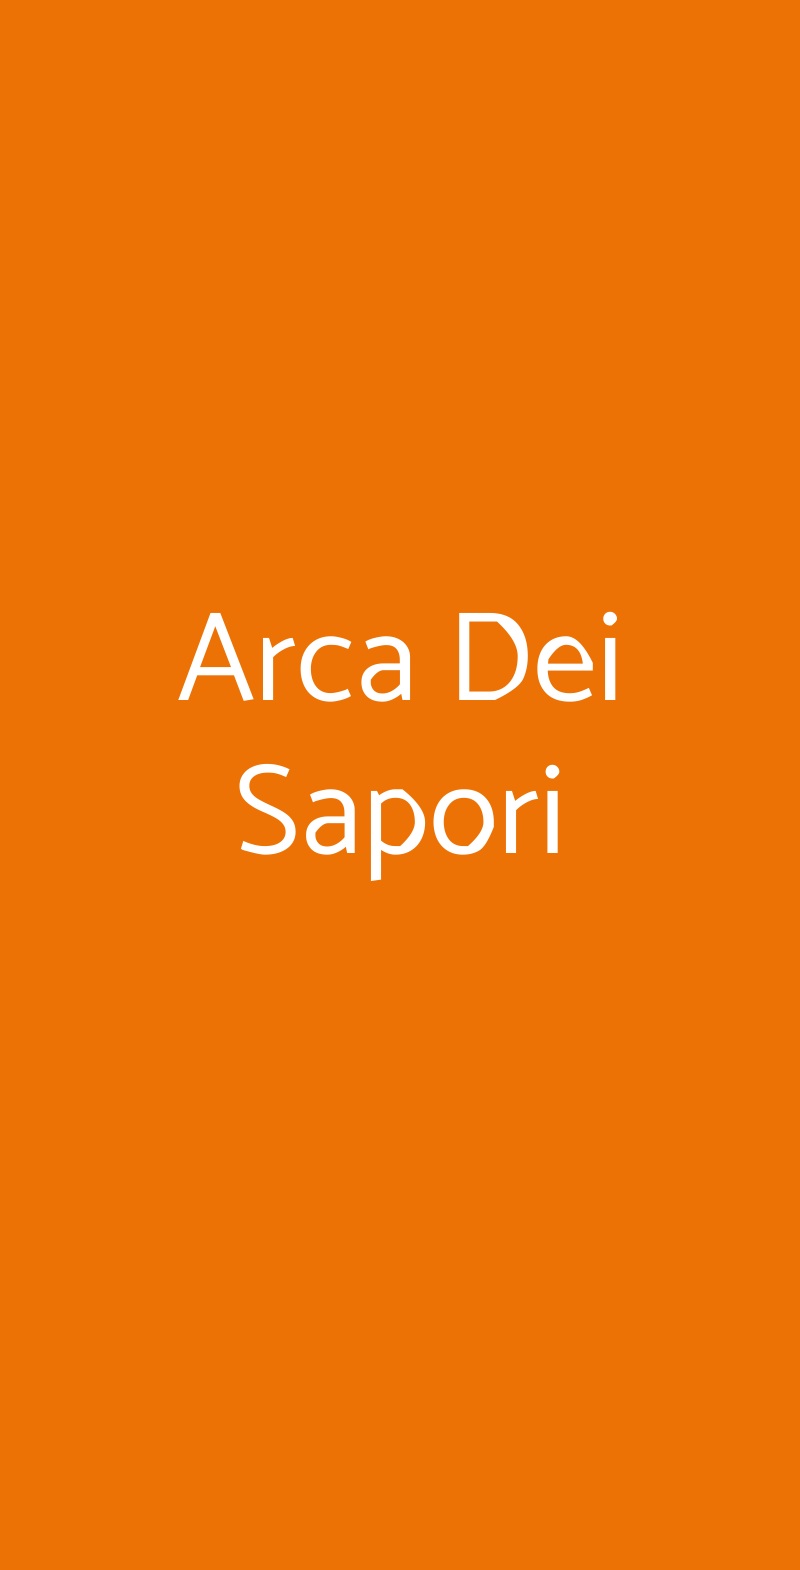 Arca Dei Sapori Milano menù 1 pagina